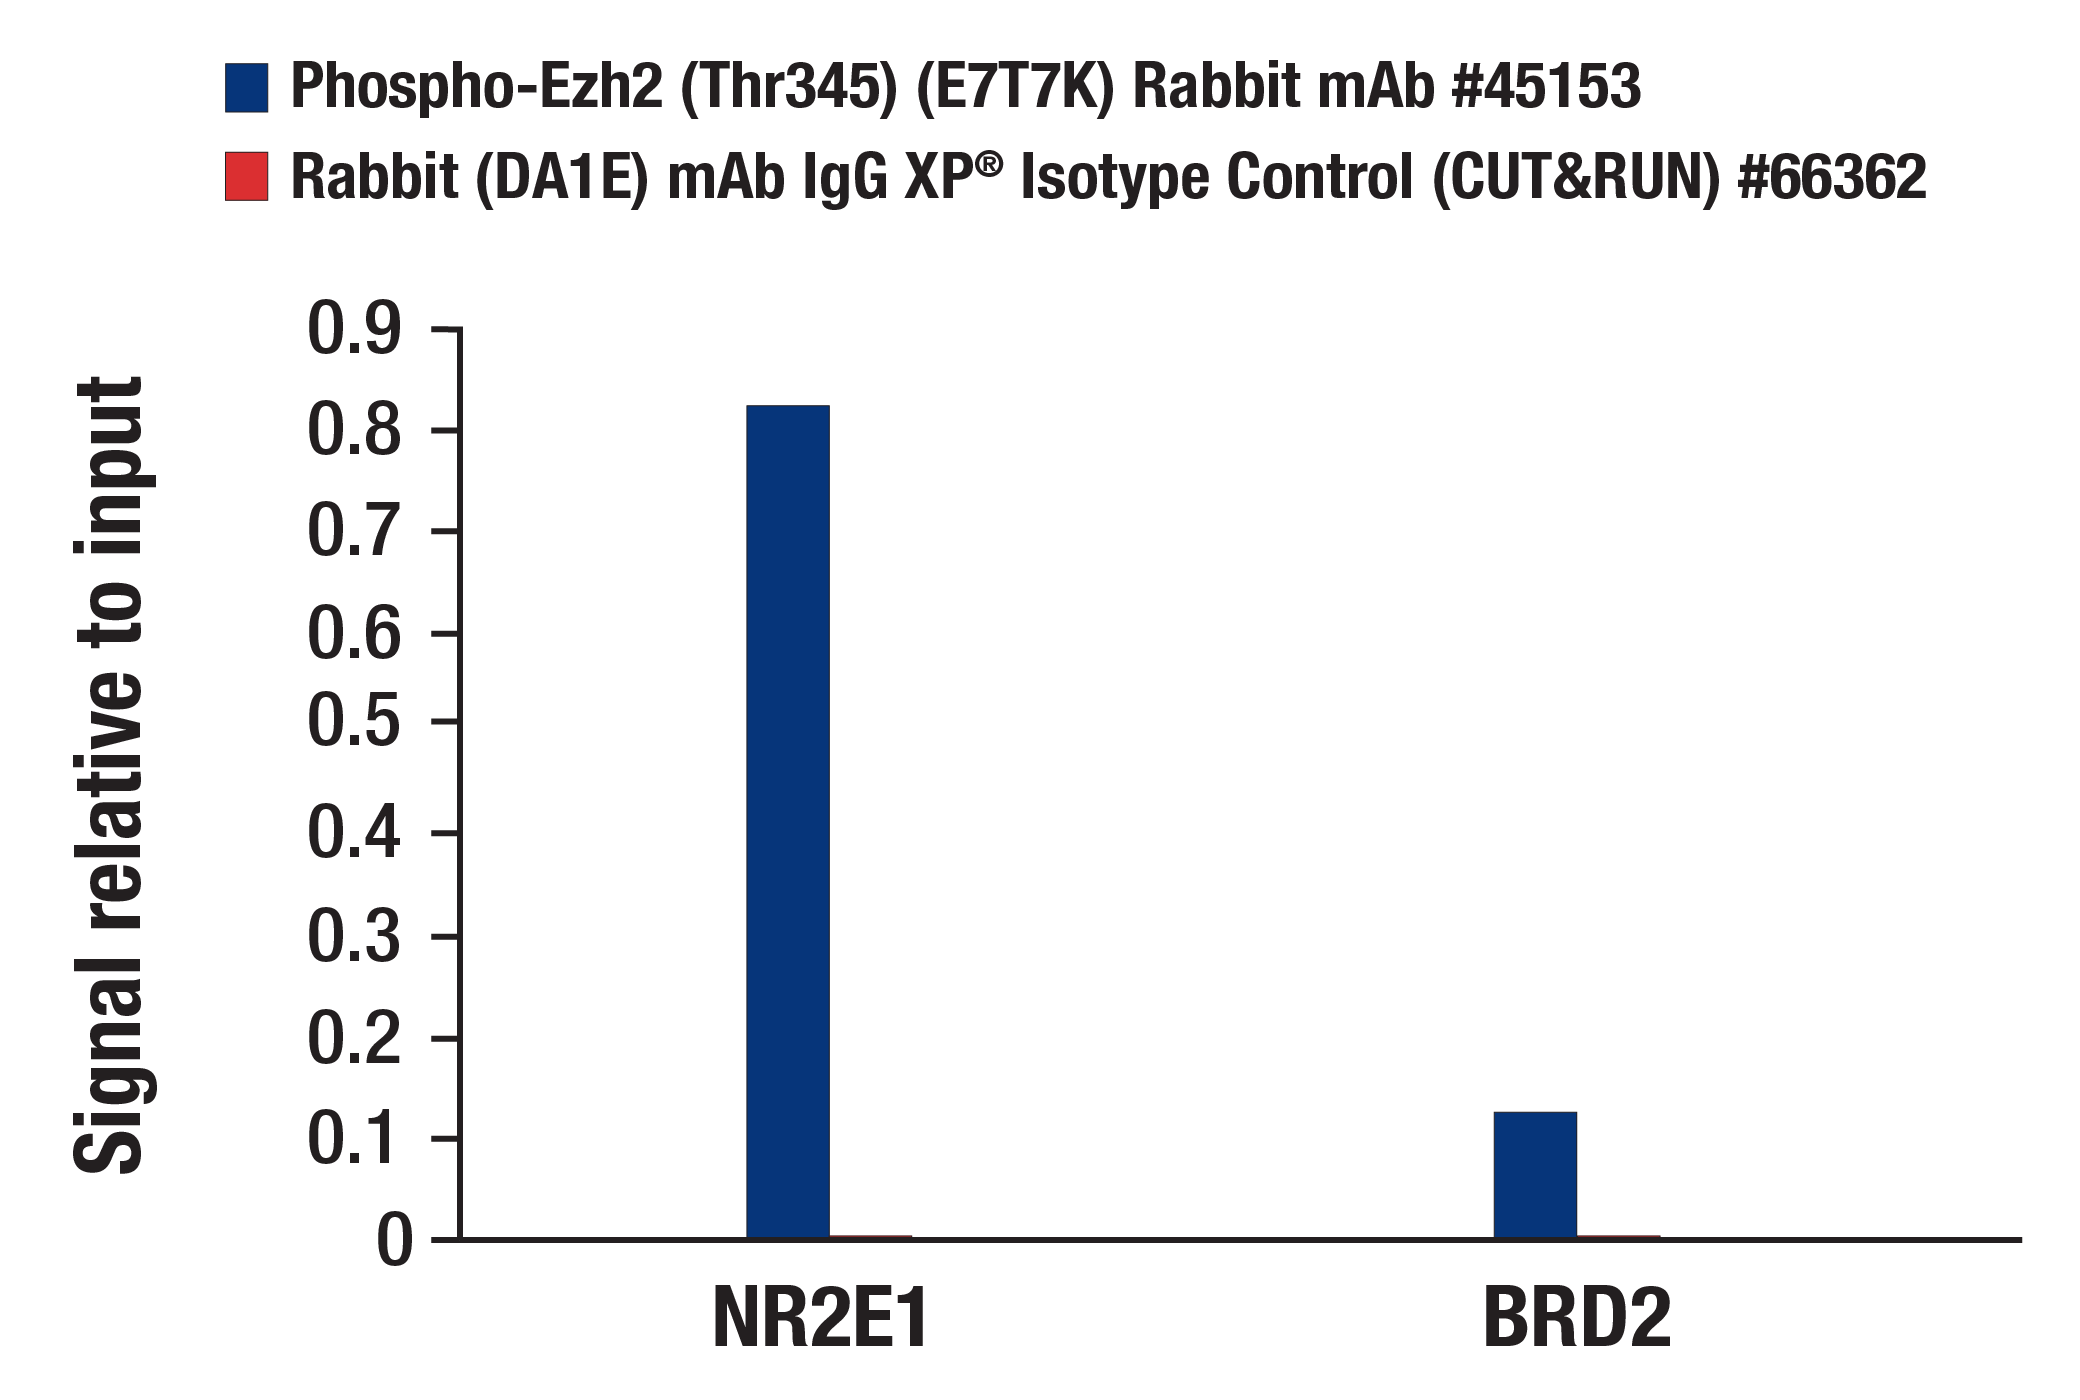 CUT and RUN Image 3: Phospho-Ezh2 (Thr345) (E7T7K) Rabbit mAb